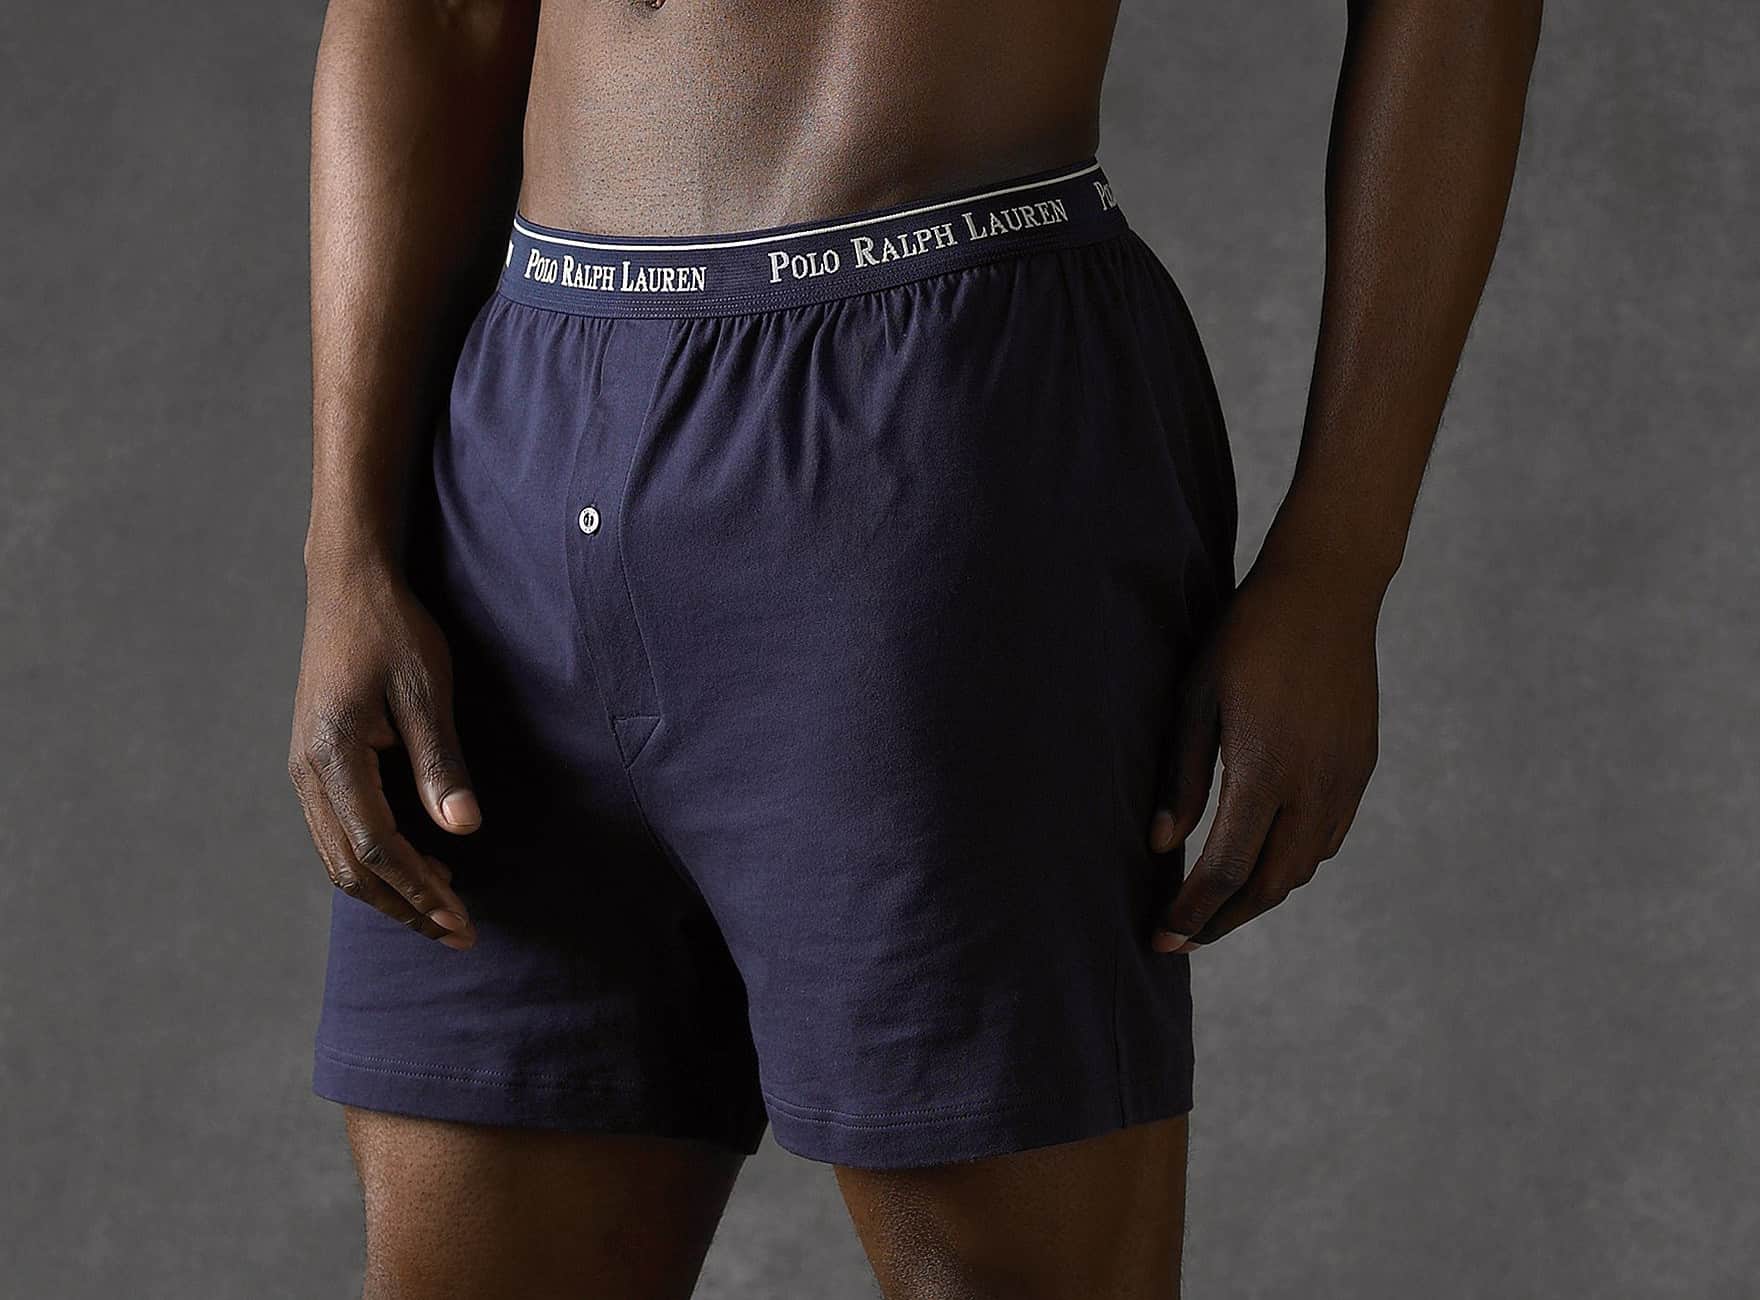 Polo Ralph Lauren Knit Boxer - underwear brand for men